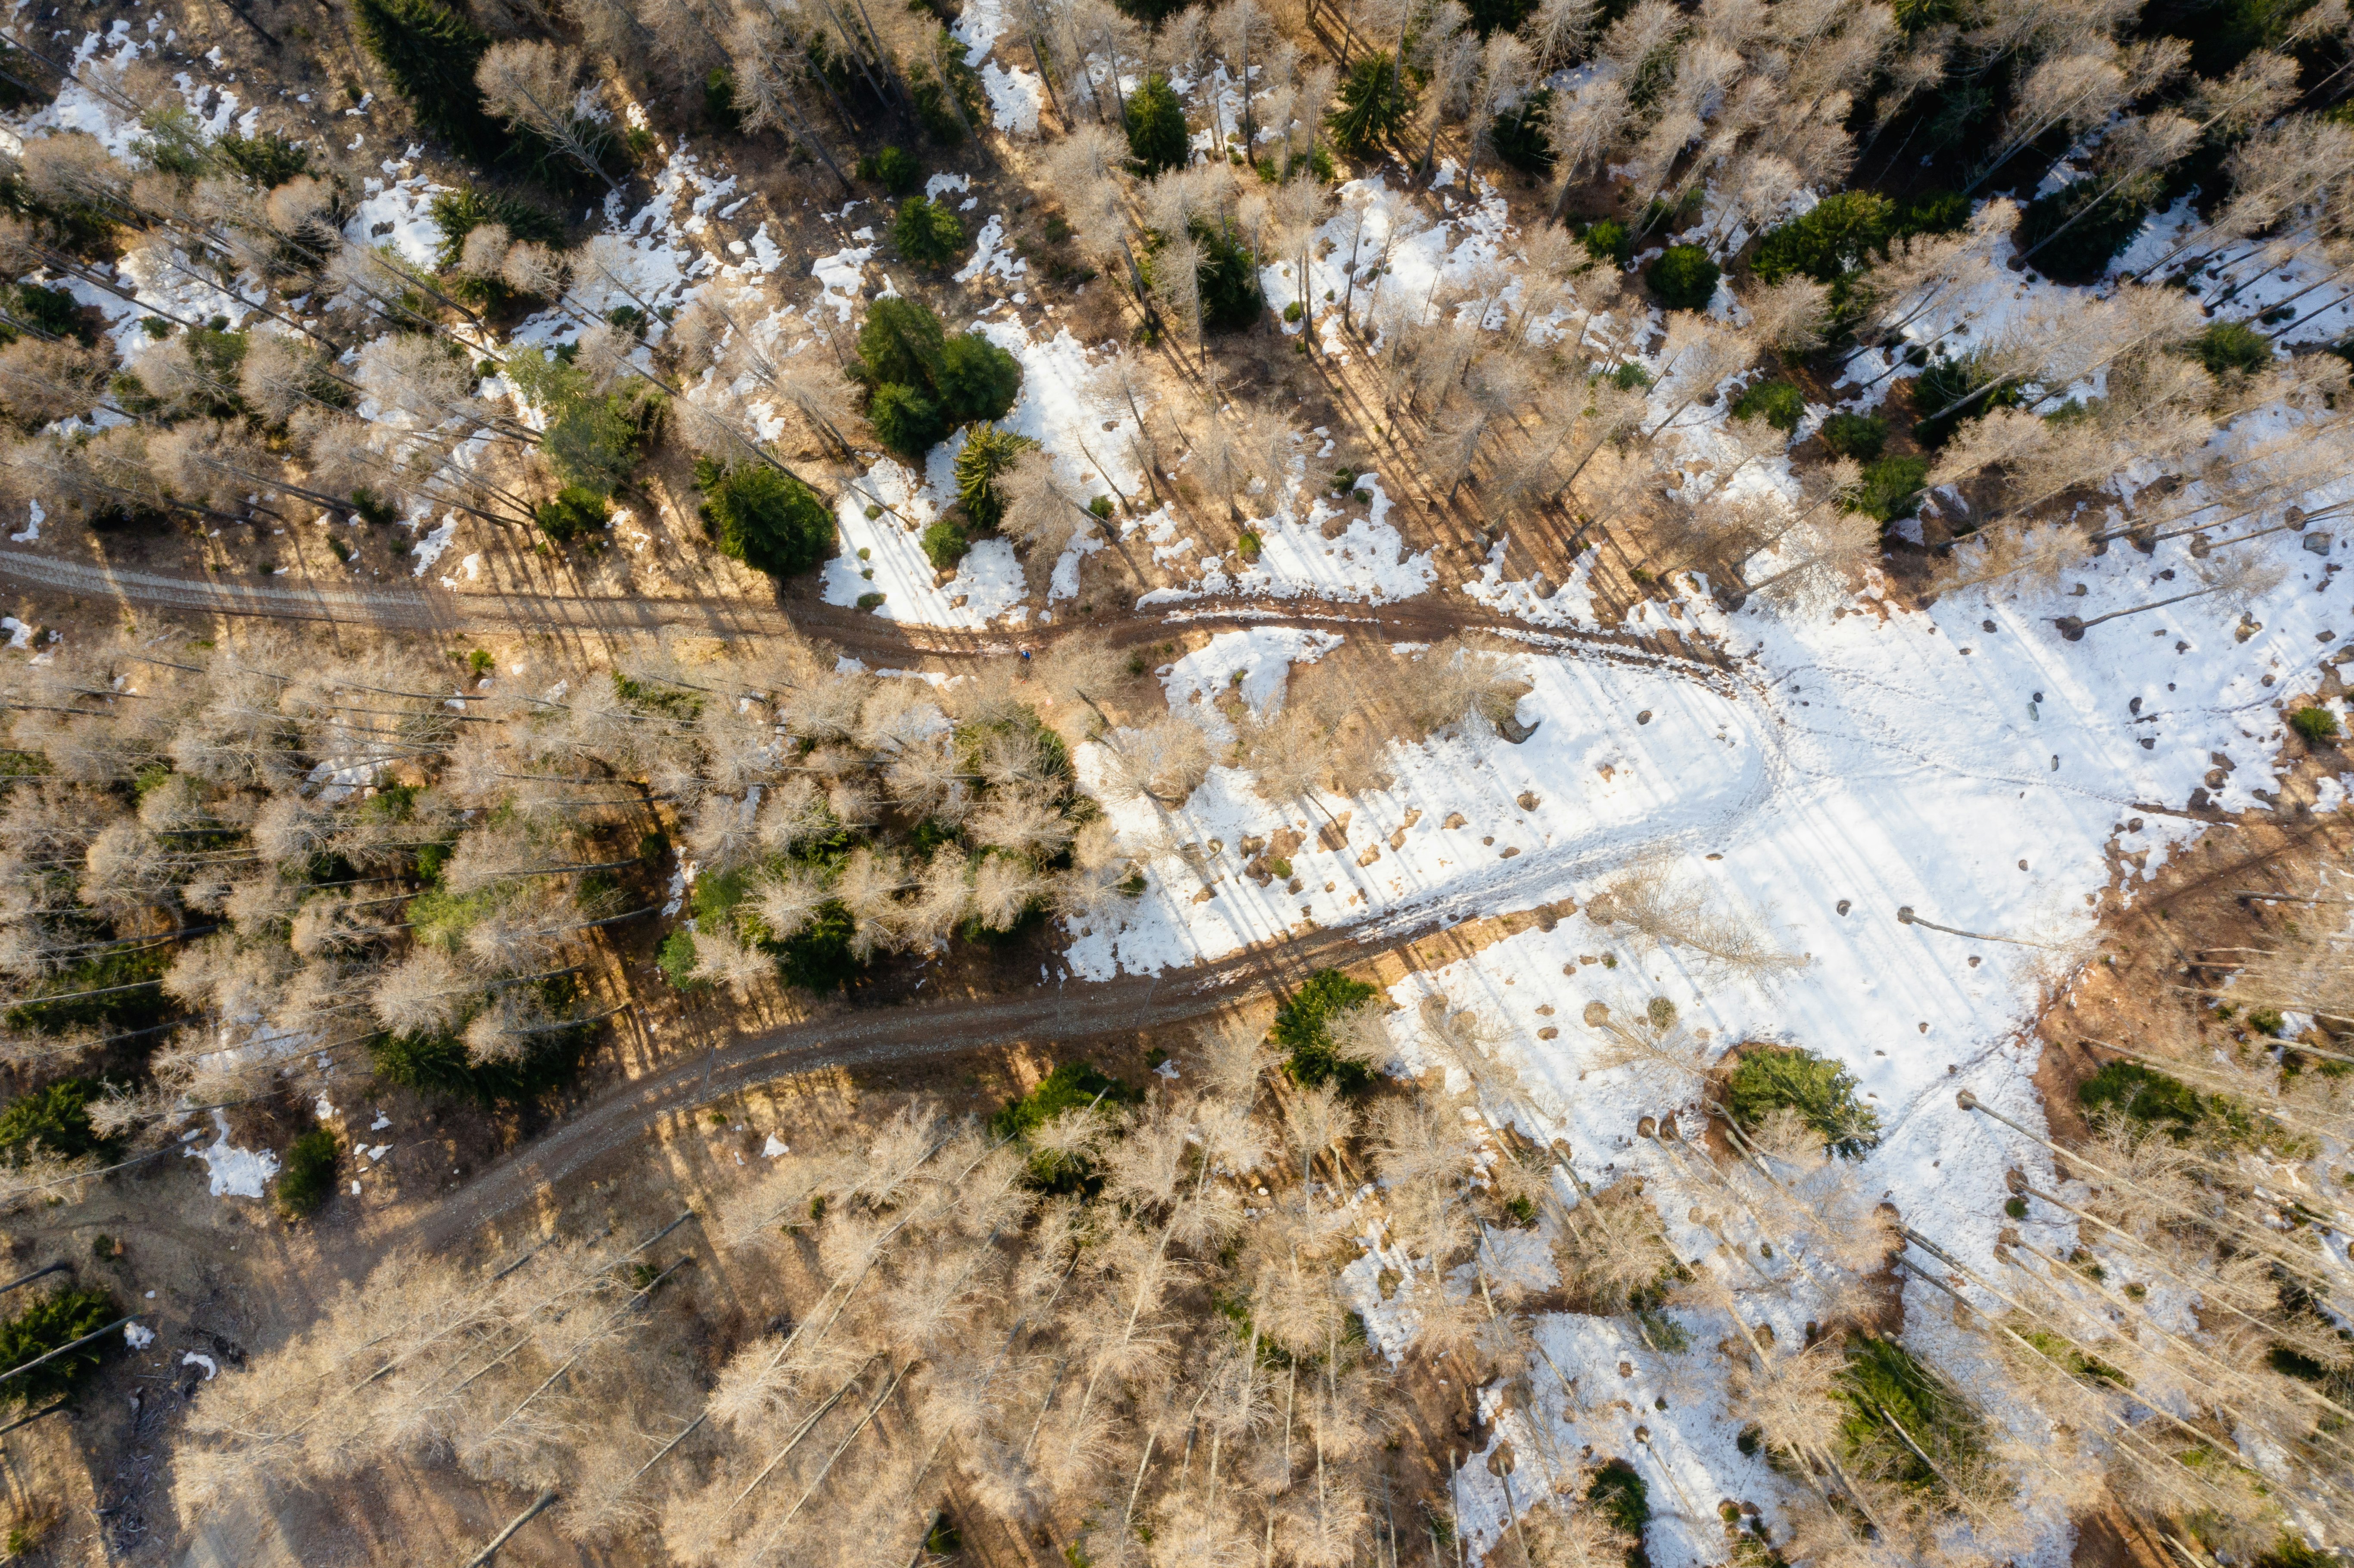 aerial view of road between trees